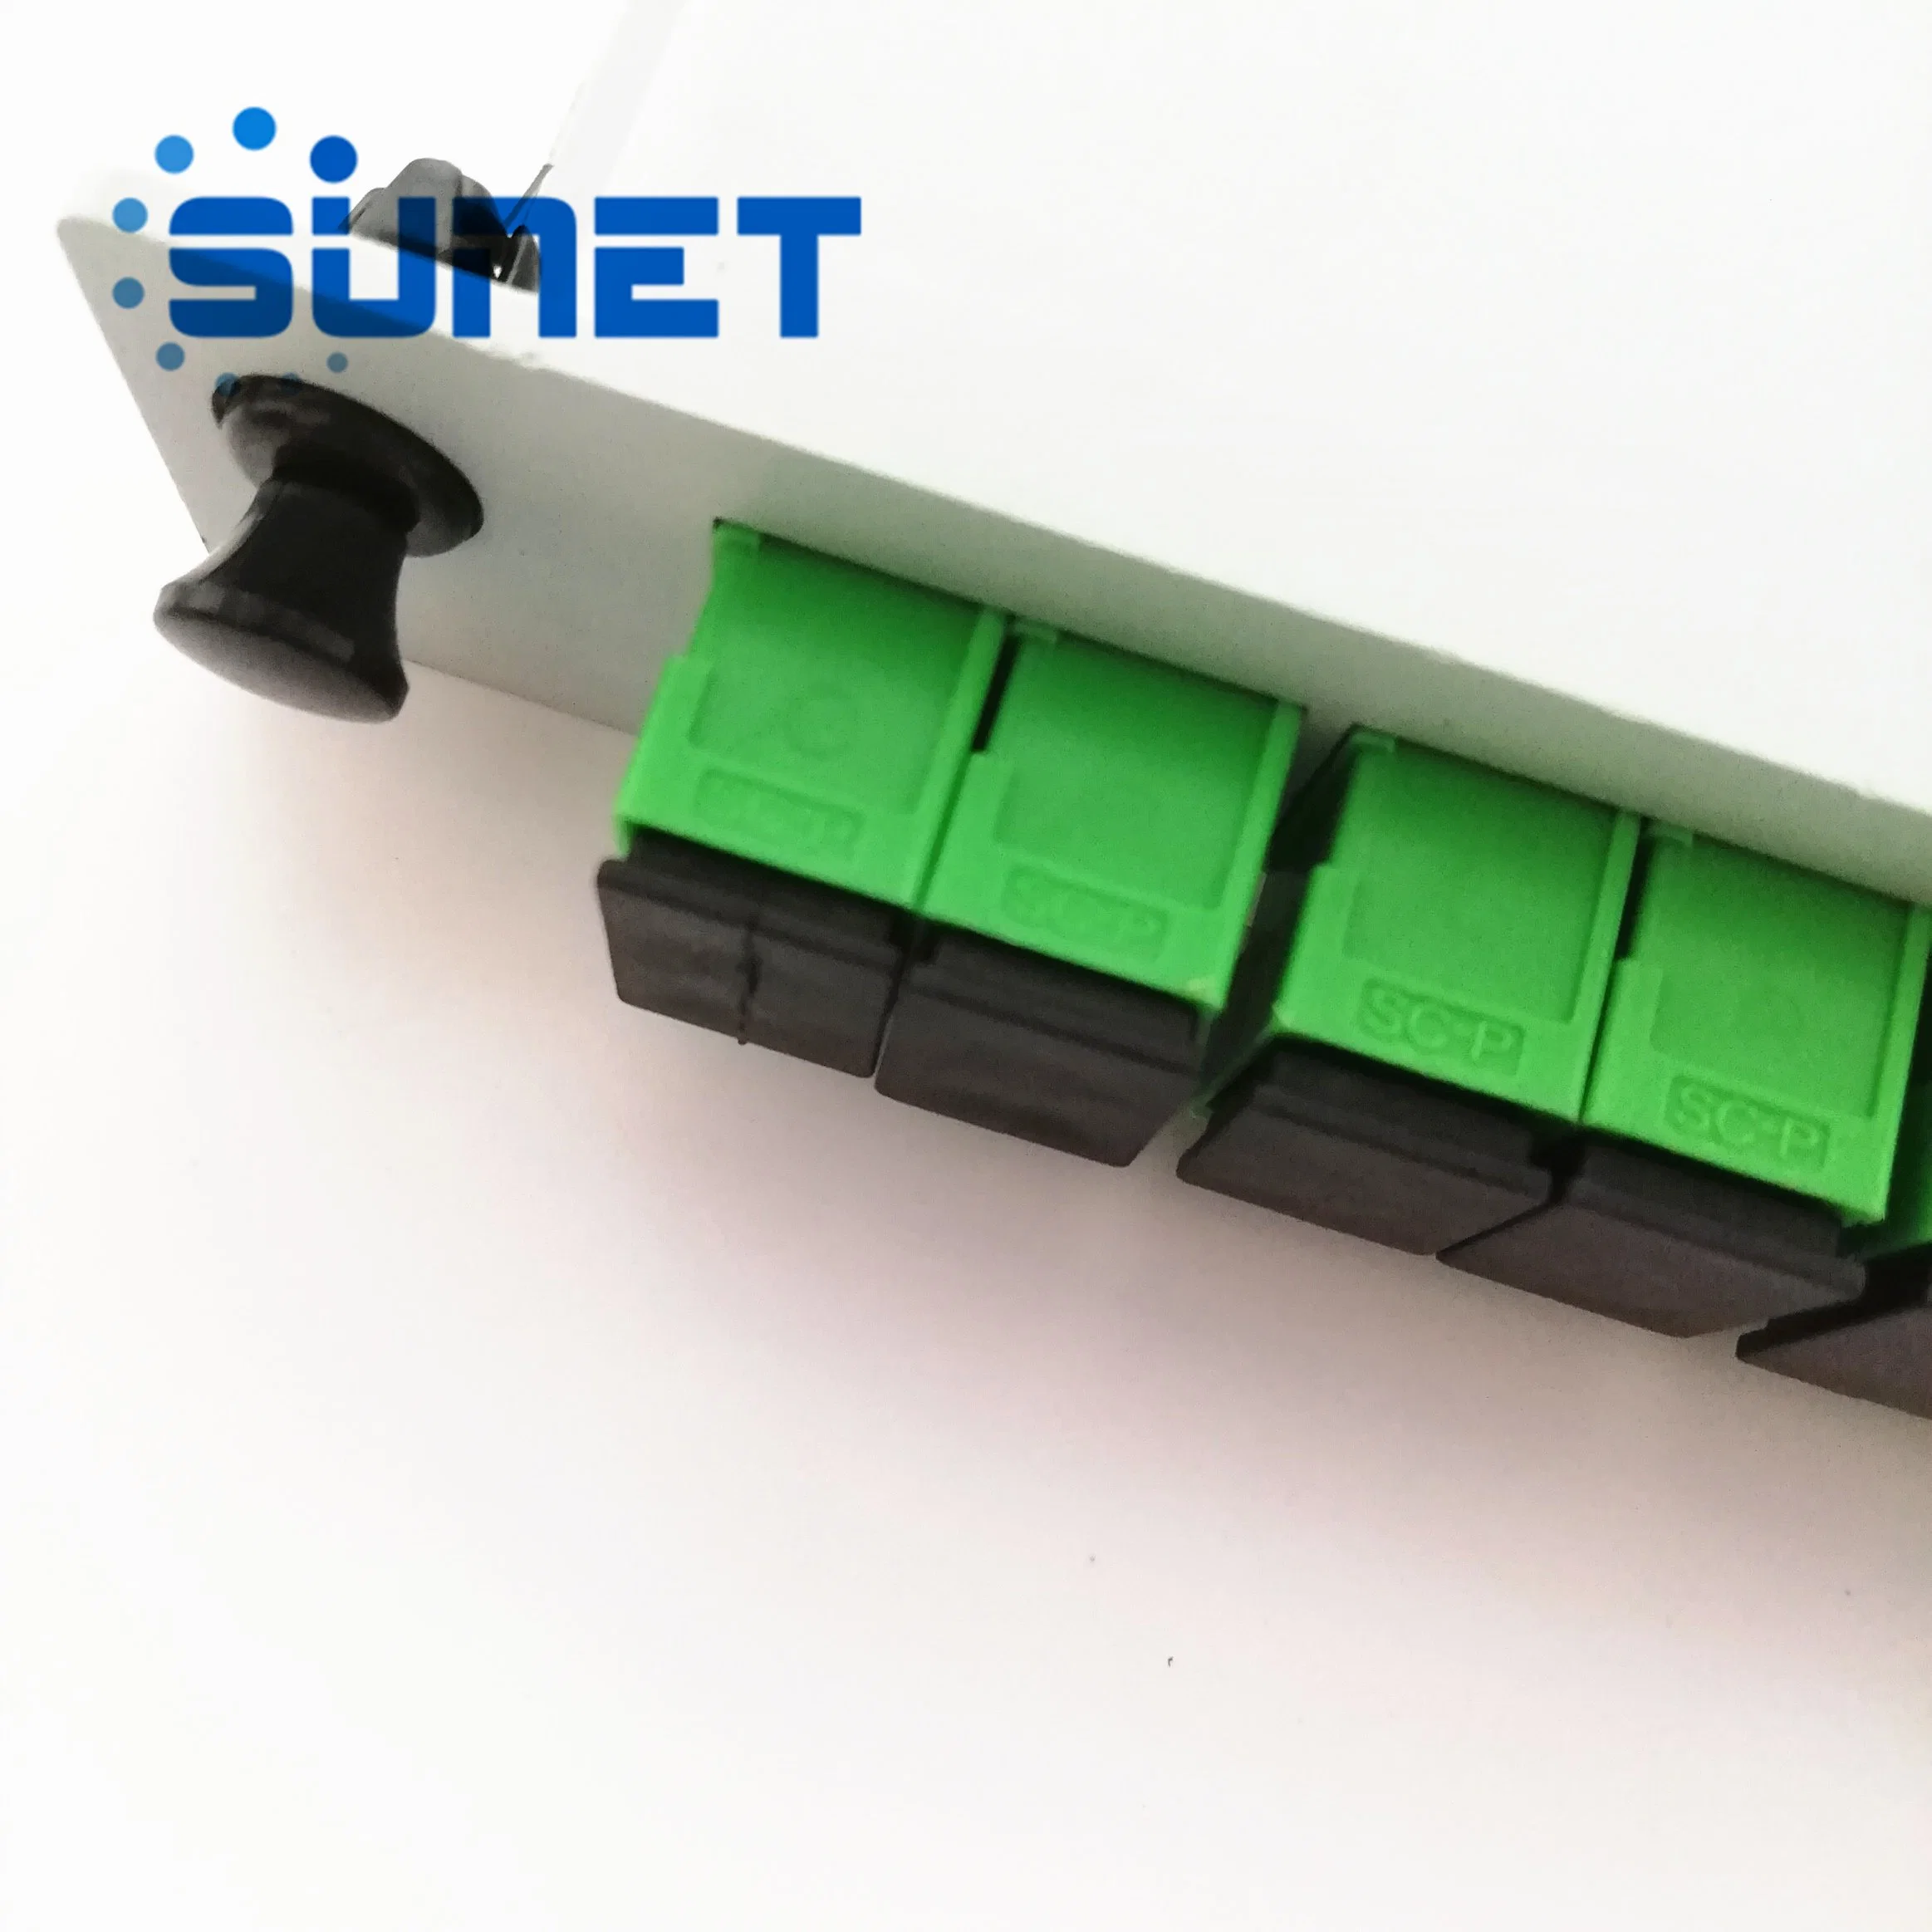 Tipo de cinta 1*8 PLC Splitter de fibra óptica con conectores SC/APC